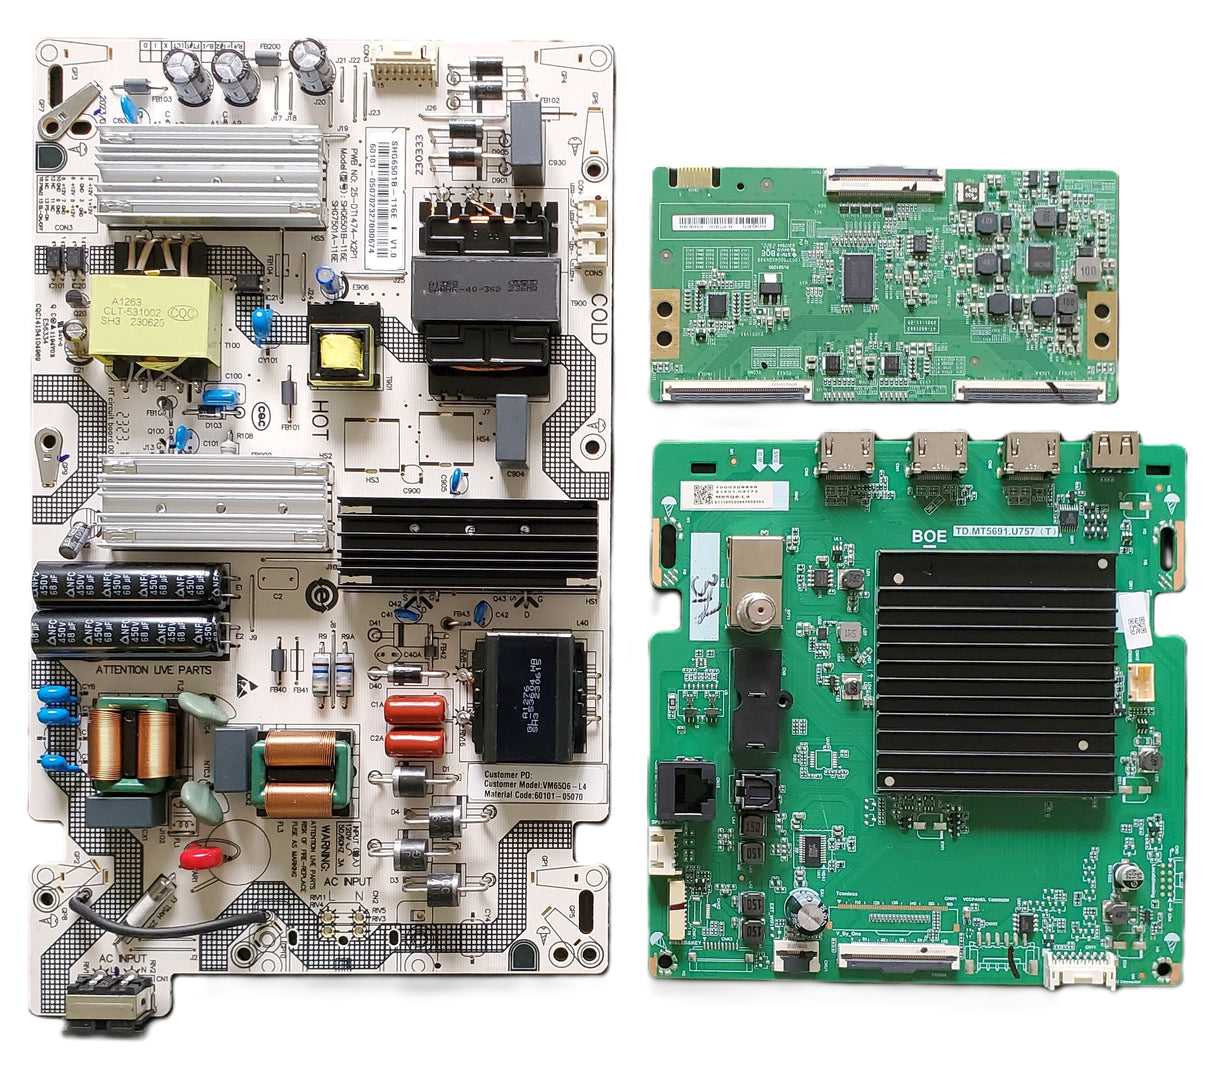 M65Q6-L4 Vizio TV Repair Parts Kit, 21201-04172 Main Board, 60101-05070 Power Supply, HV650QUBF71 T-Con, M65Q6-L4